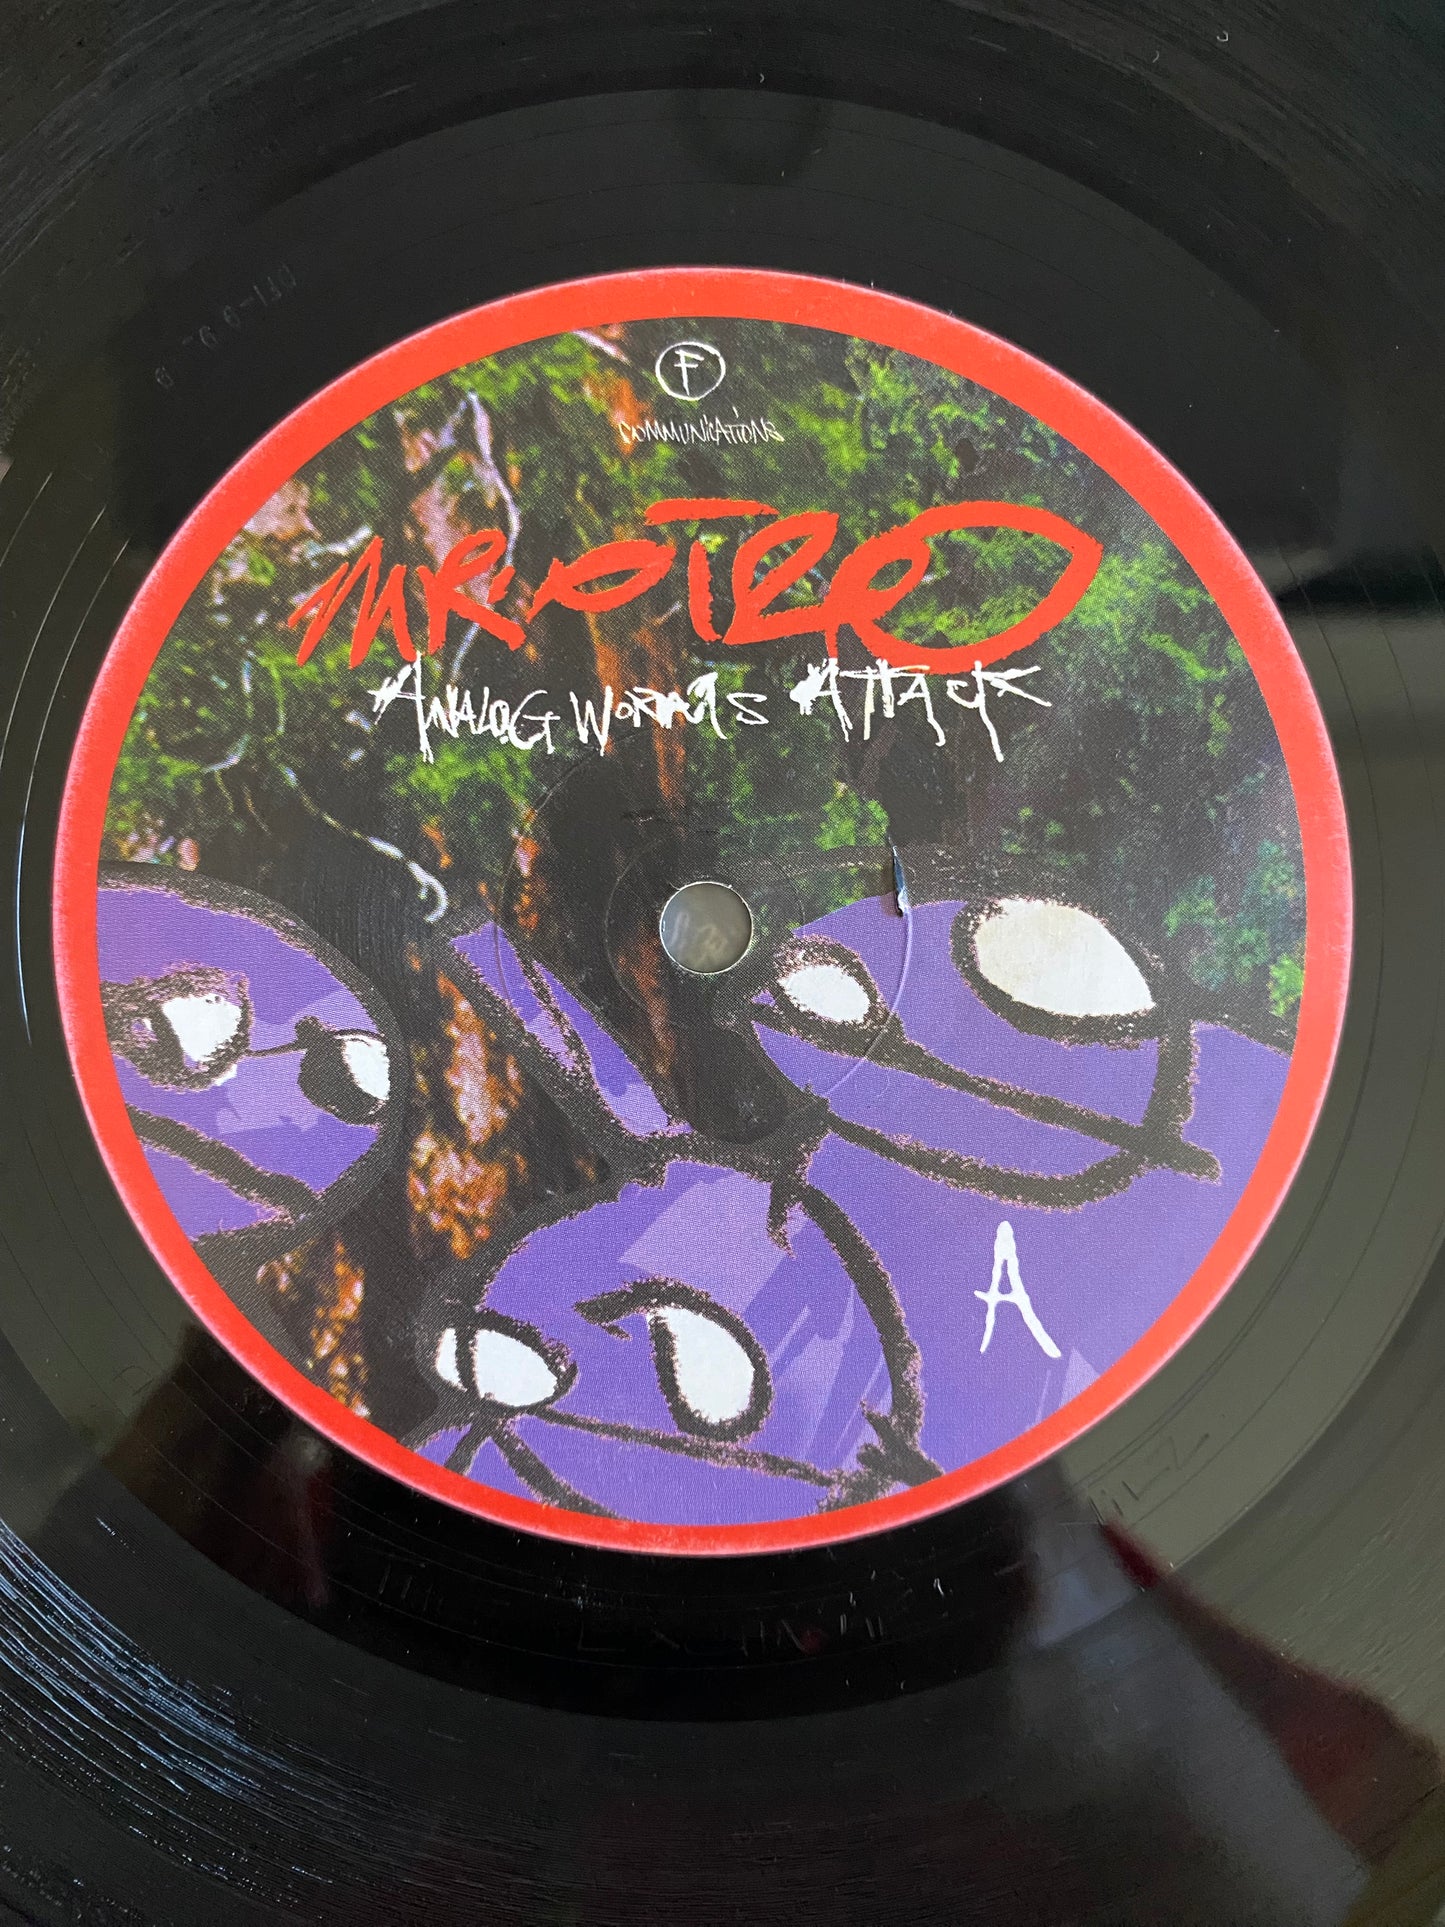 Mr. Oizo - Analog Worms Attack (2xLP, Album). HIP-HOP